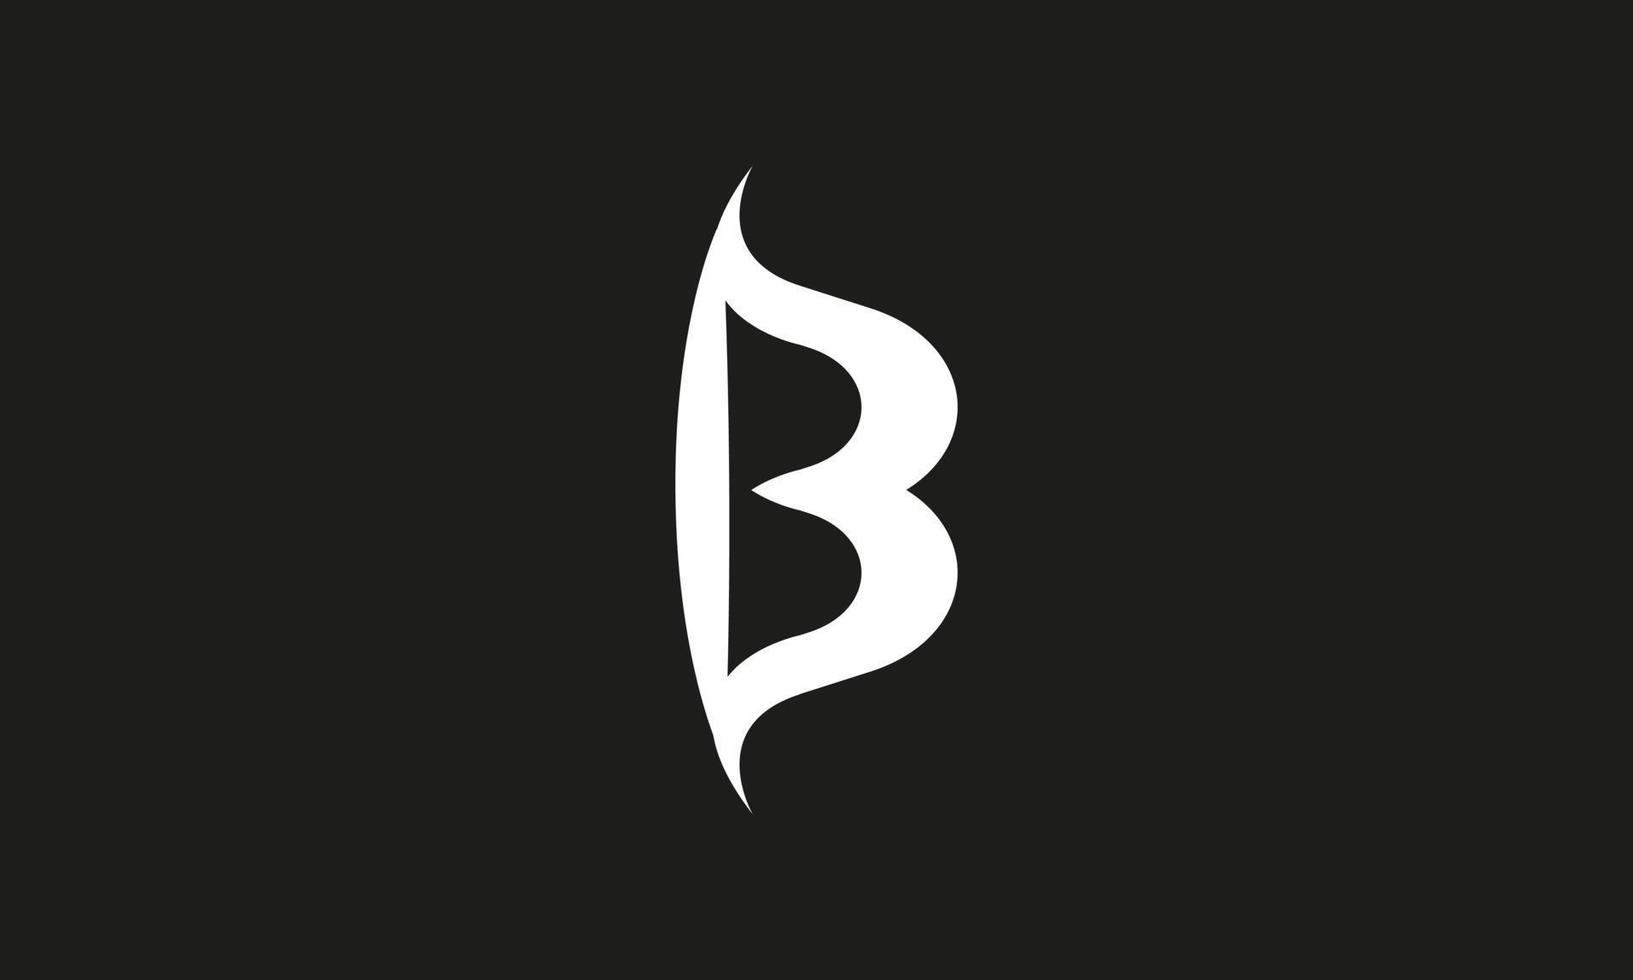 modelo de vetor livre de design de logotipo letra b.